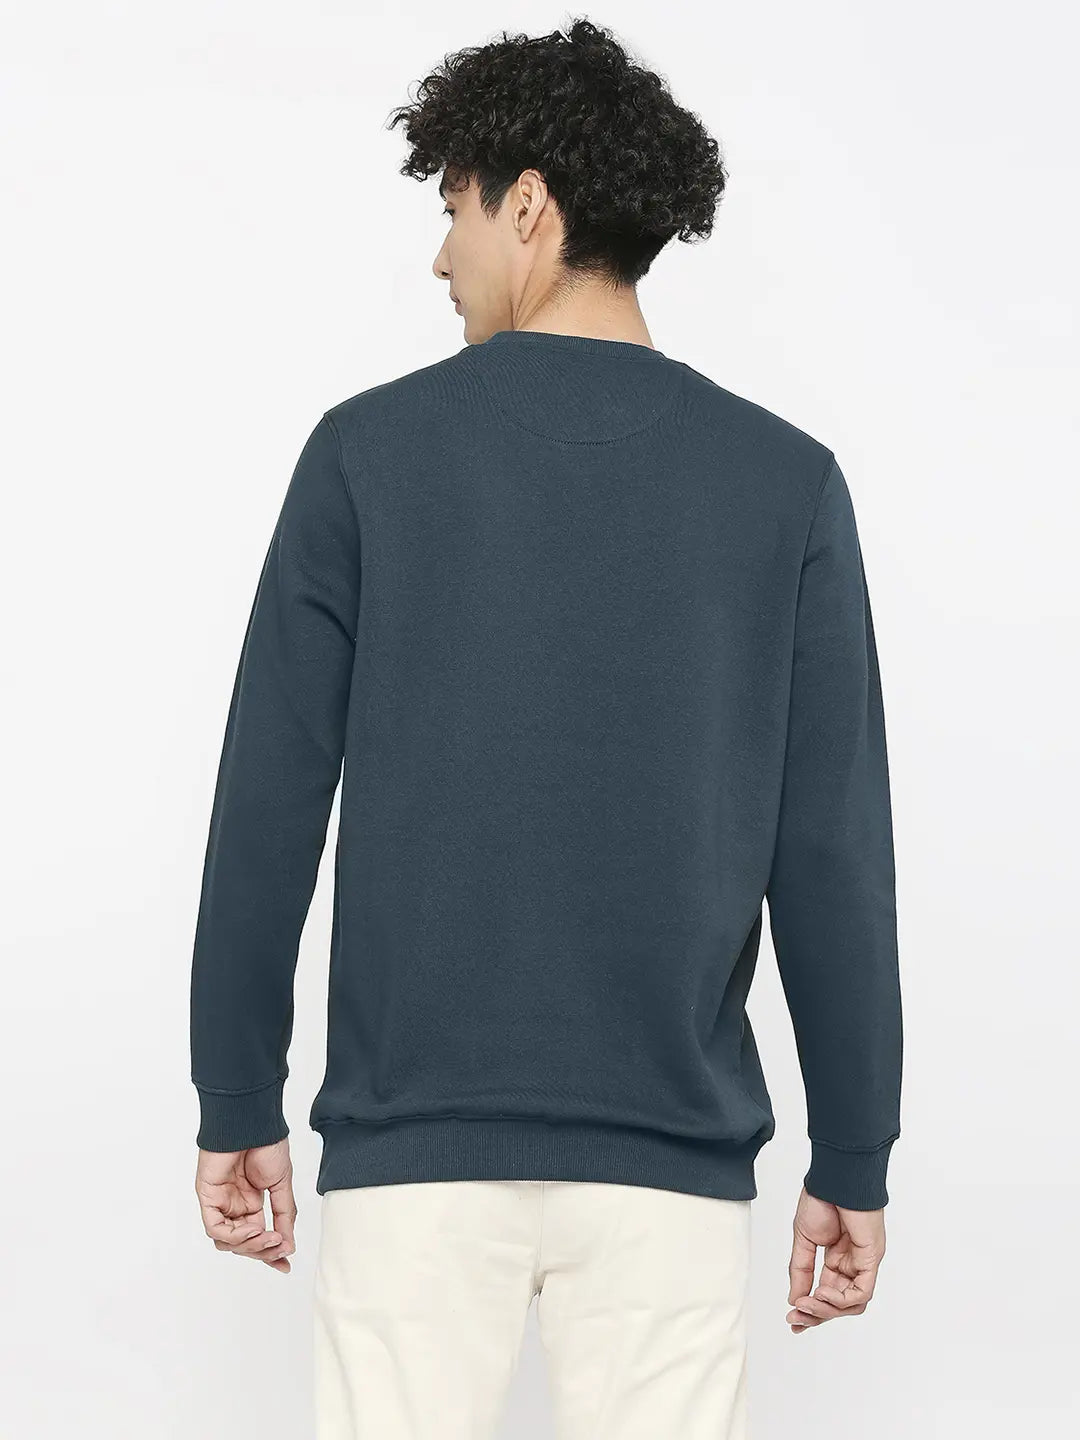 Spykar Teal Blue Cotton Full Sleeve Round Neck Sweatshirt For Men